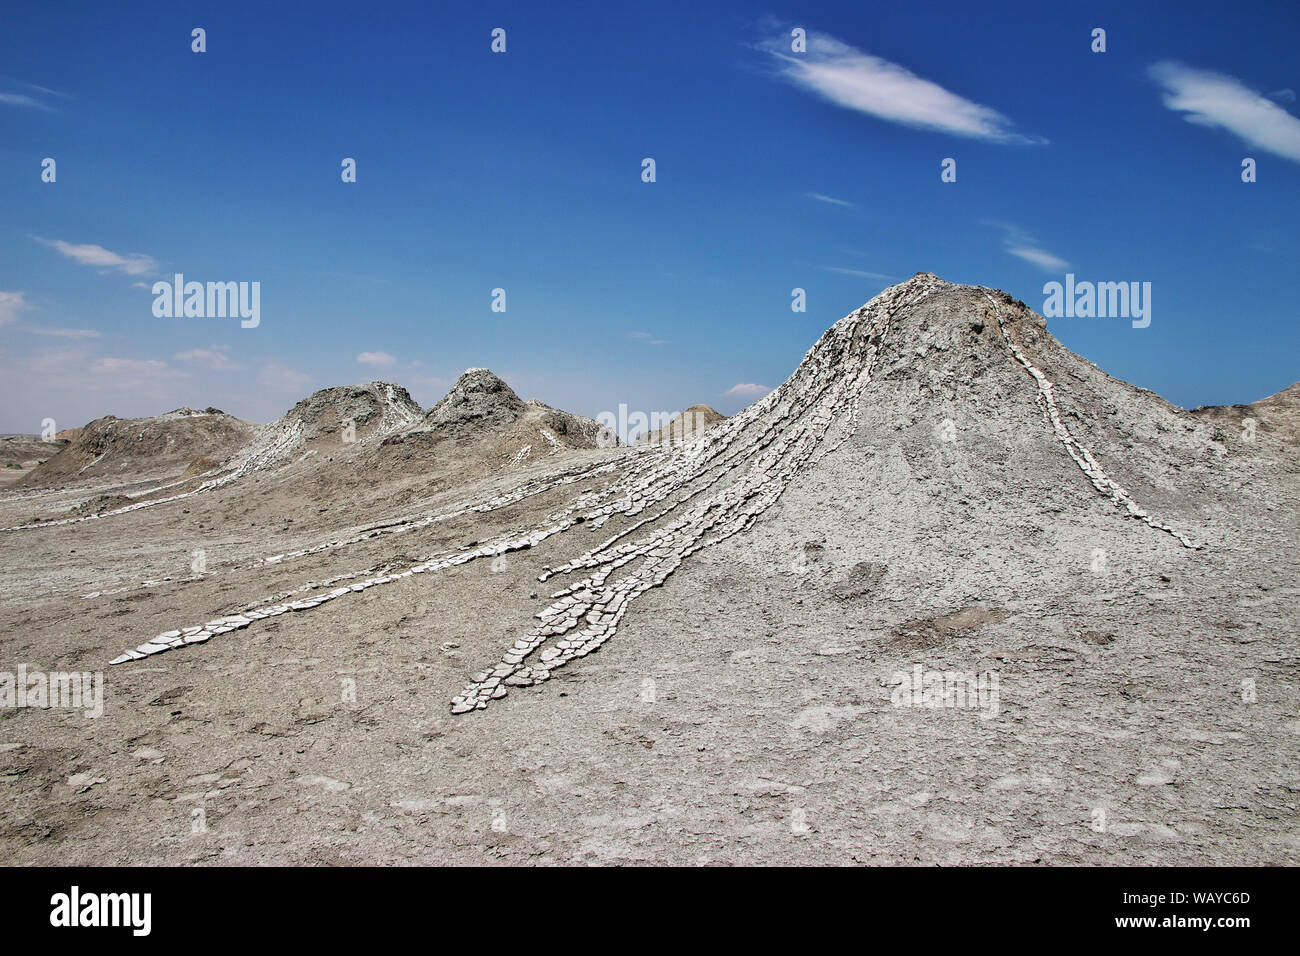 The valley with mud volcanoes, Azerbaijan Stock Photo